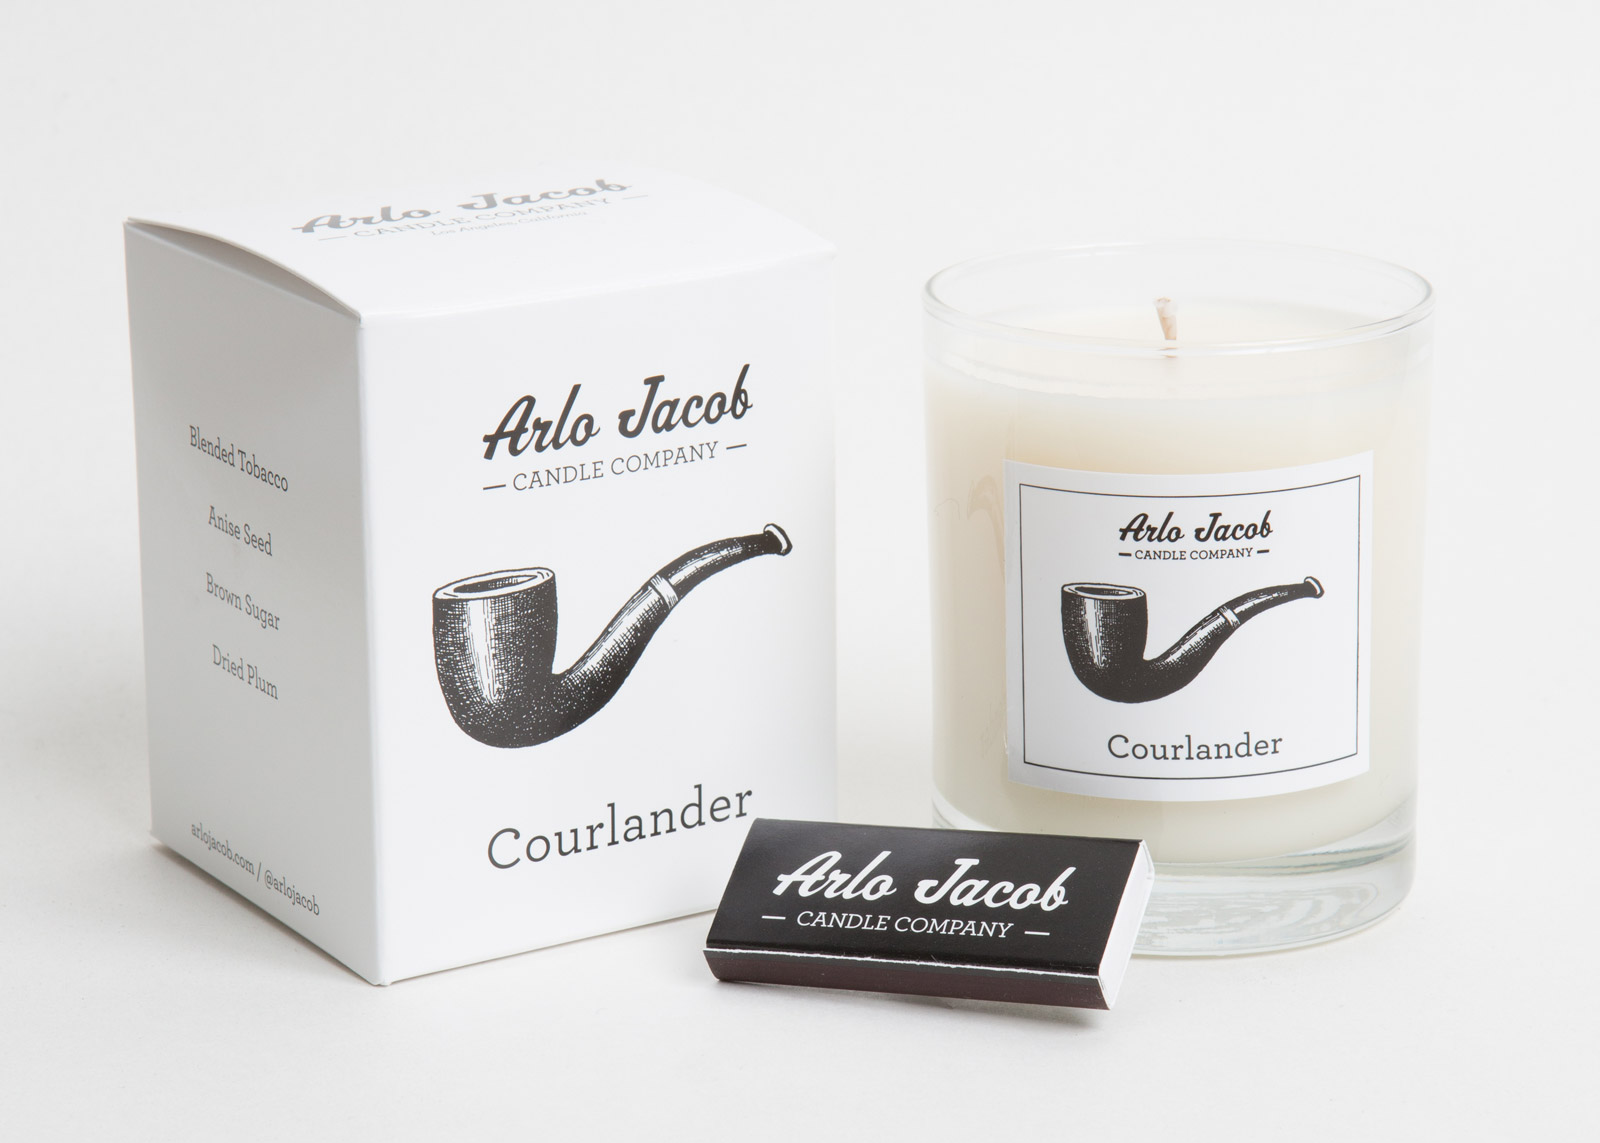 Arlo Jacob Candle Company’s Courlander candle